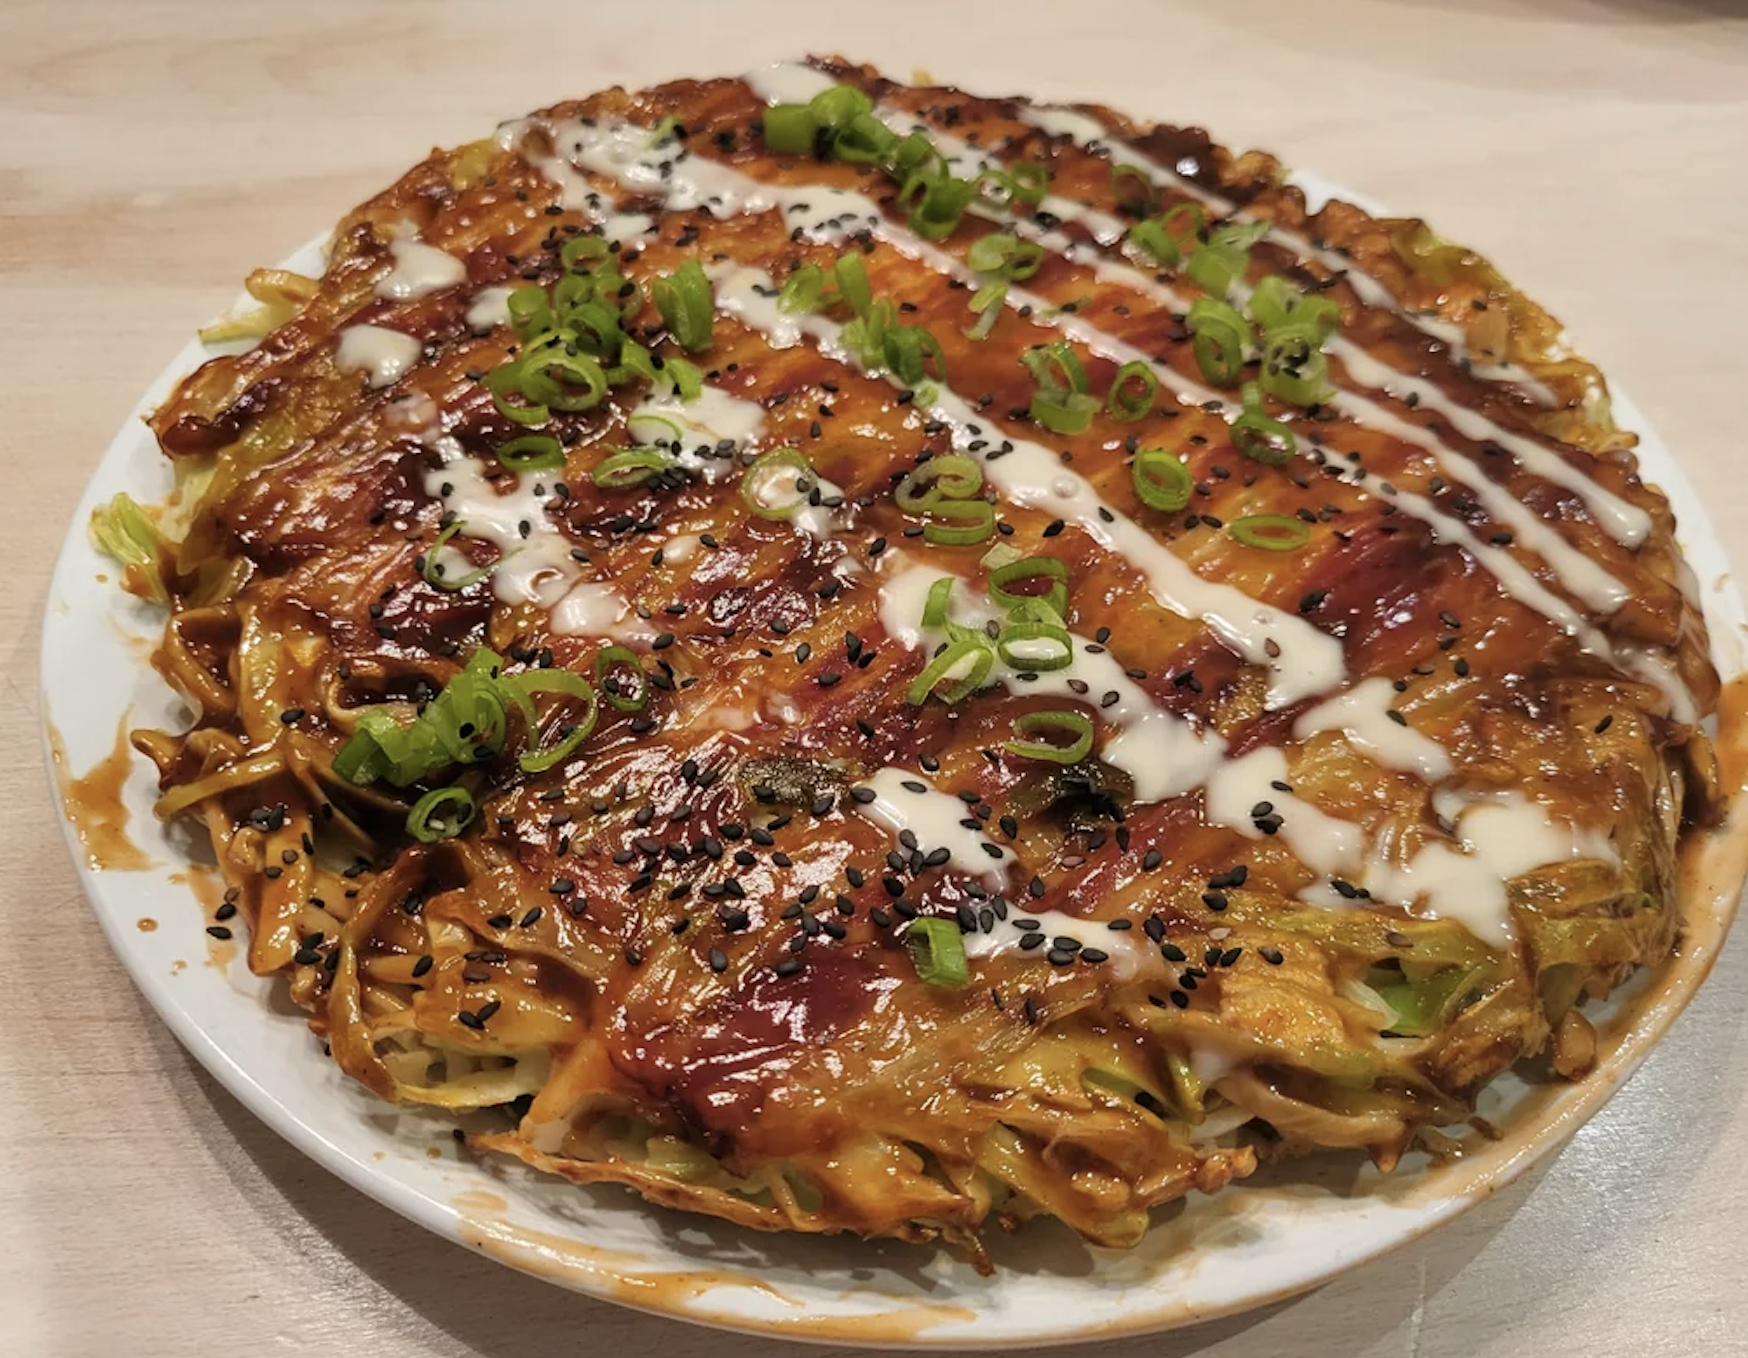 Okonomiyaki (Japanese savory pancake) topped with sauces, green onions, and sesame seeds on a plate